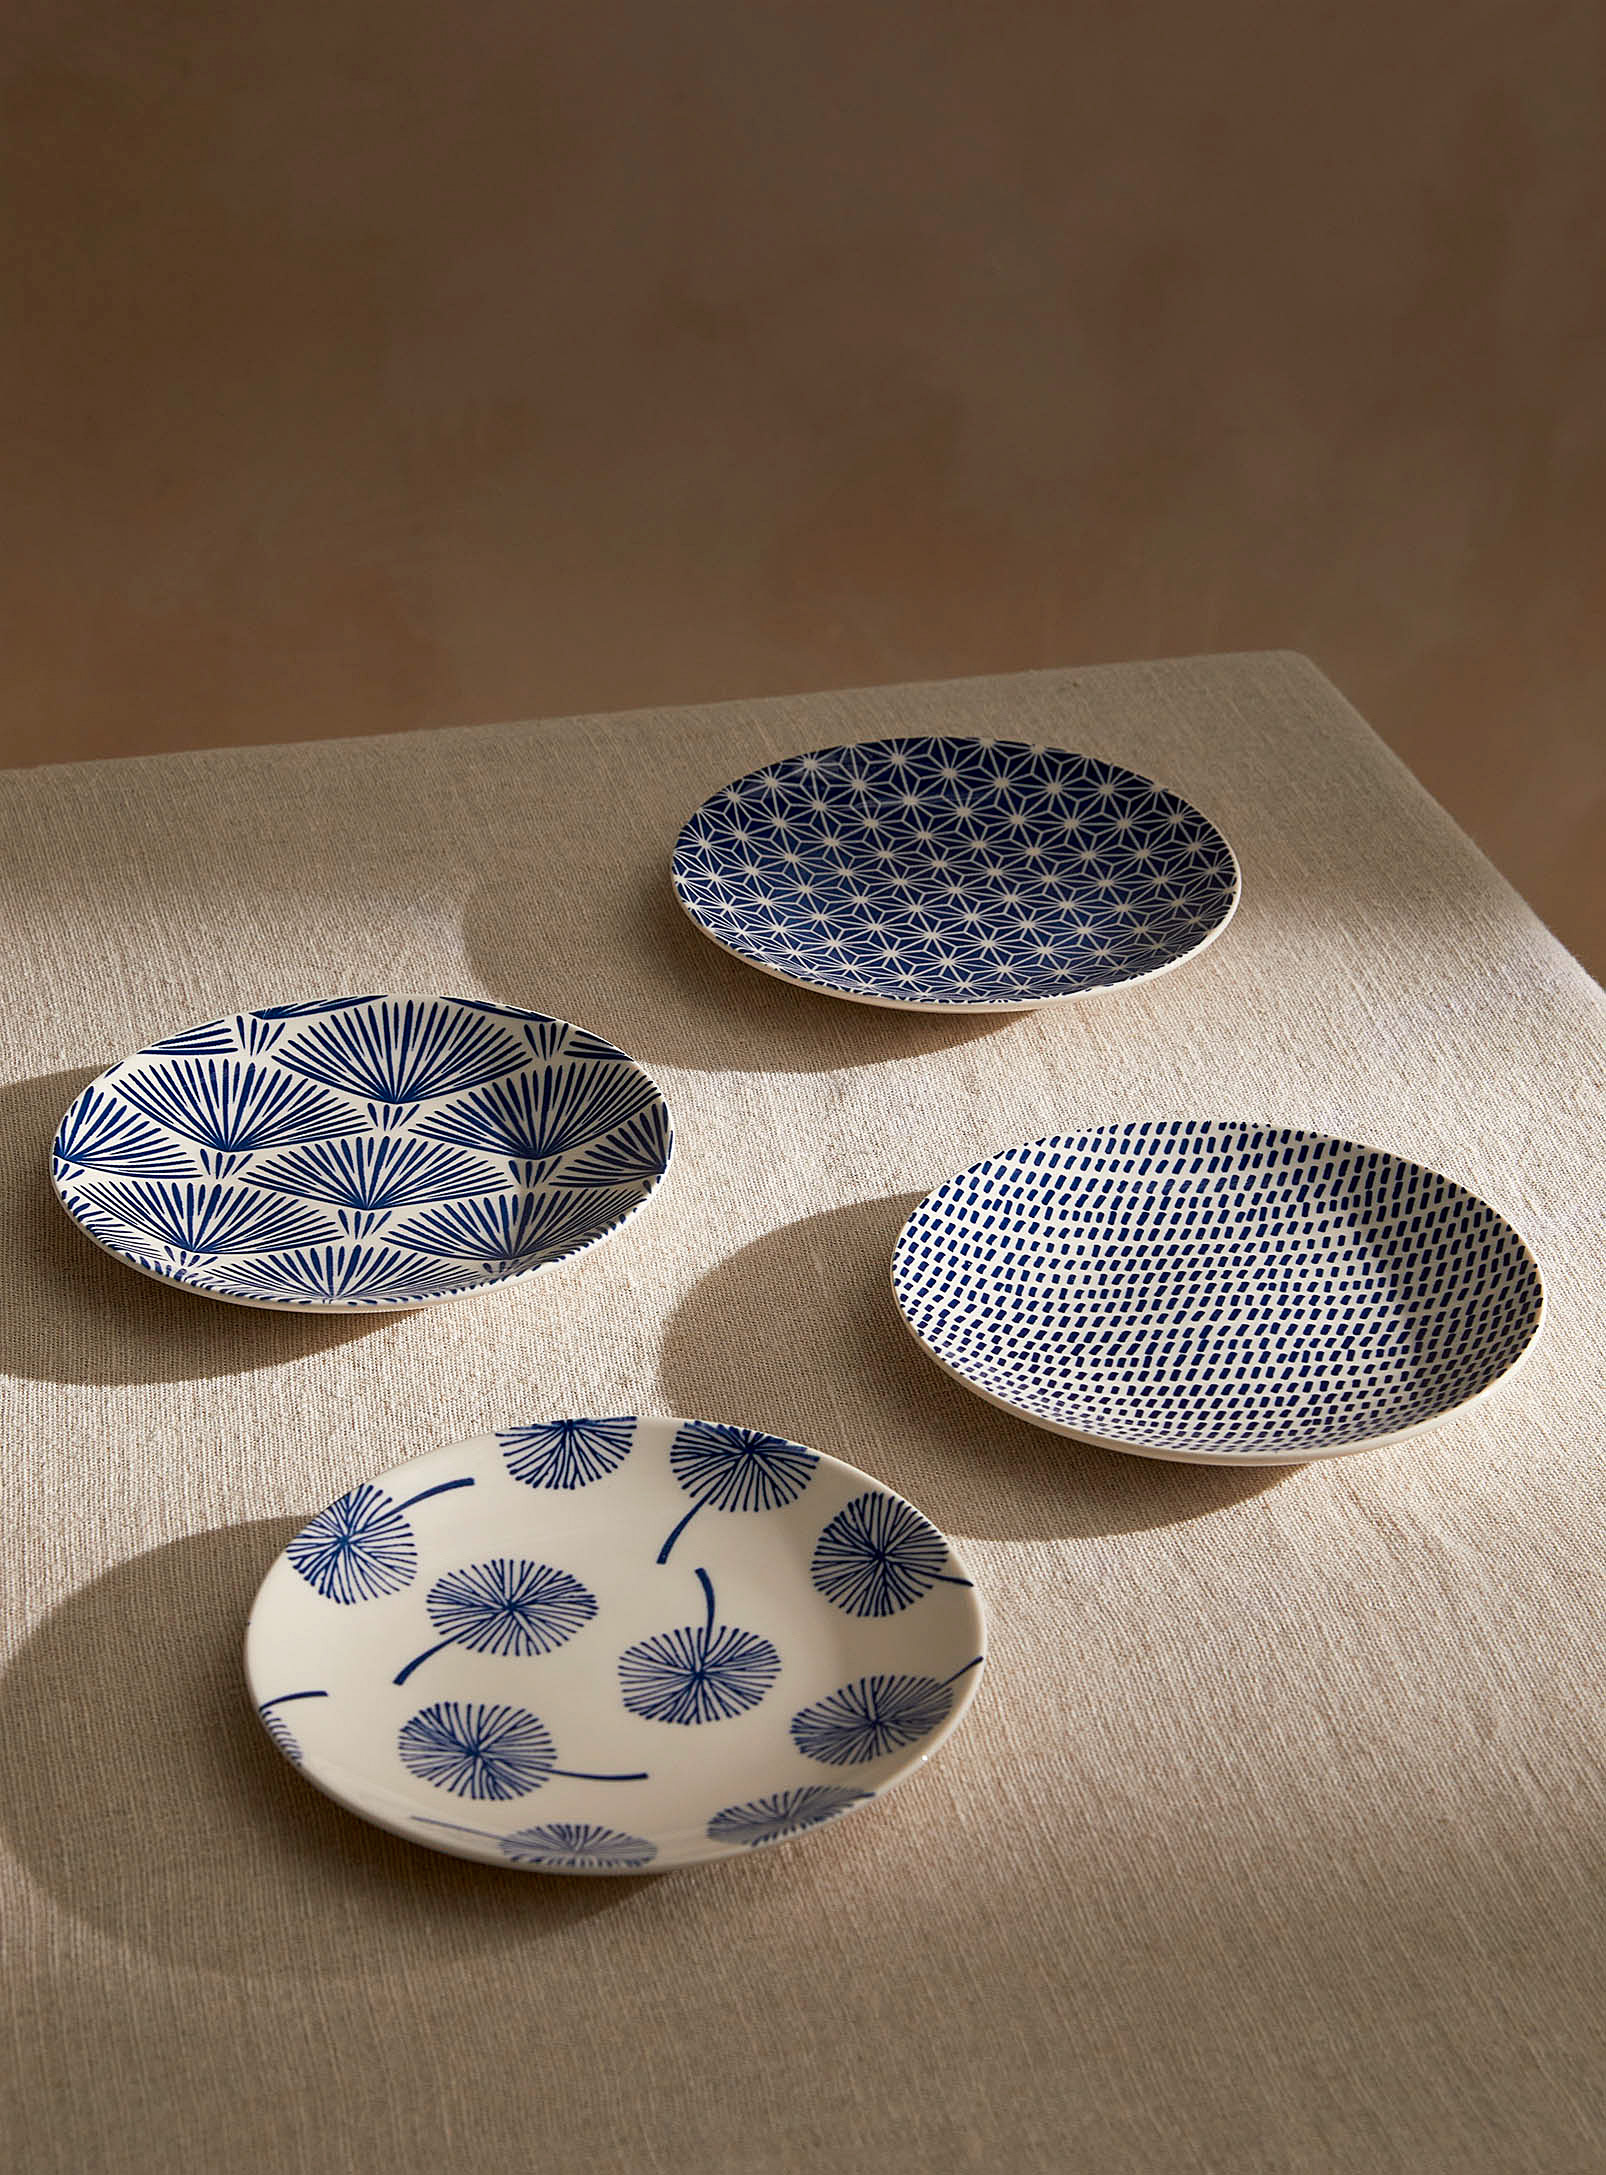 Simons Maison Dandelions Small Plates Set Of 4 In Blue